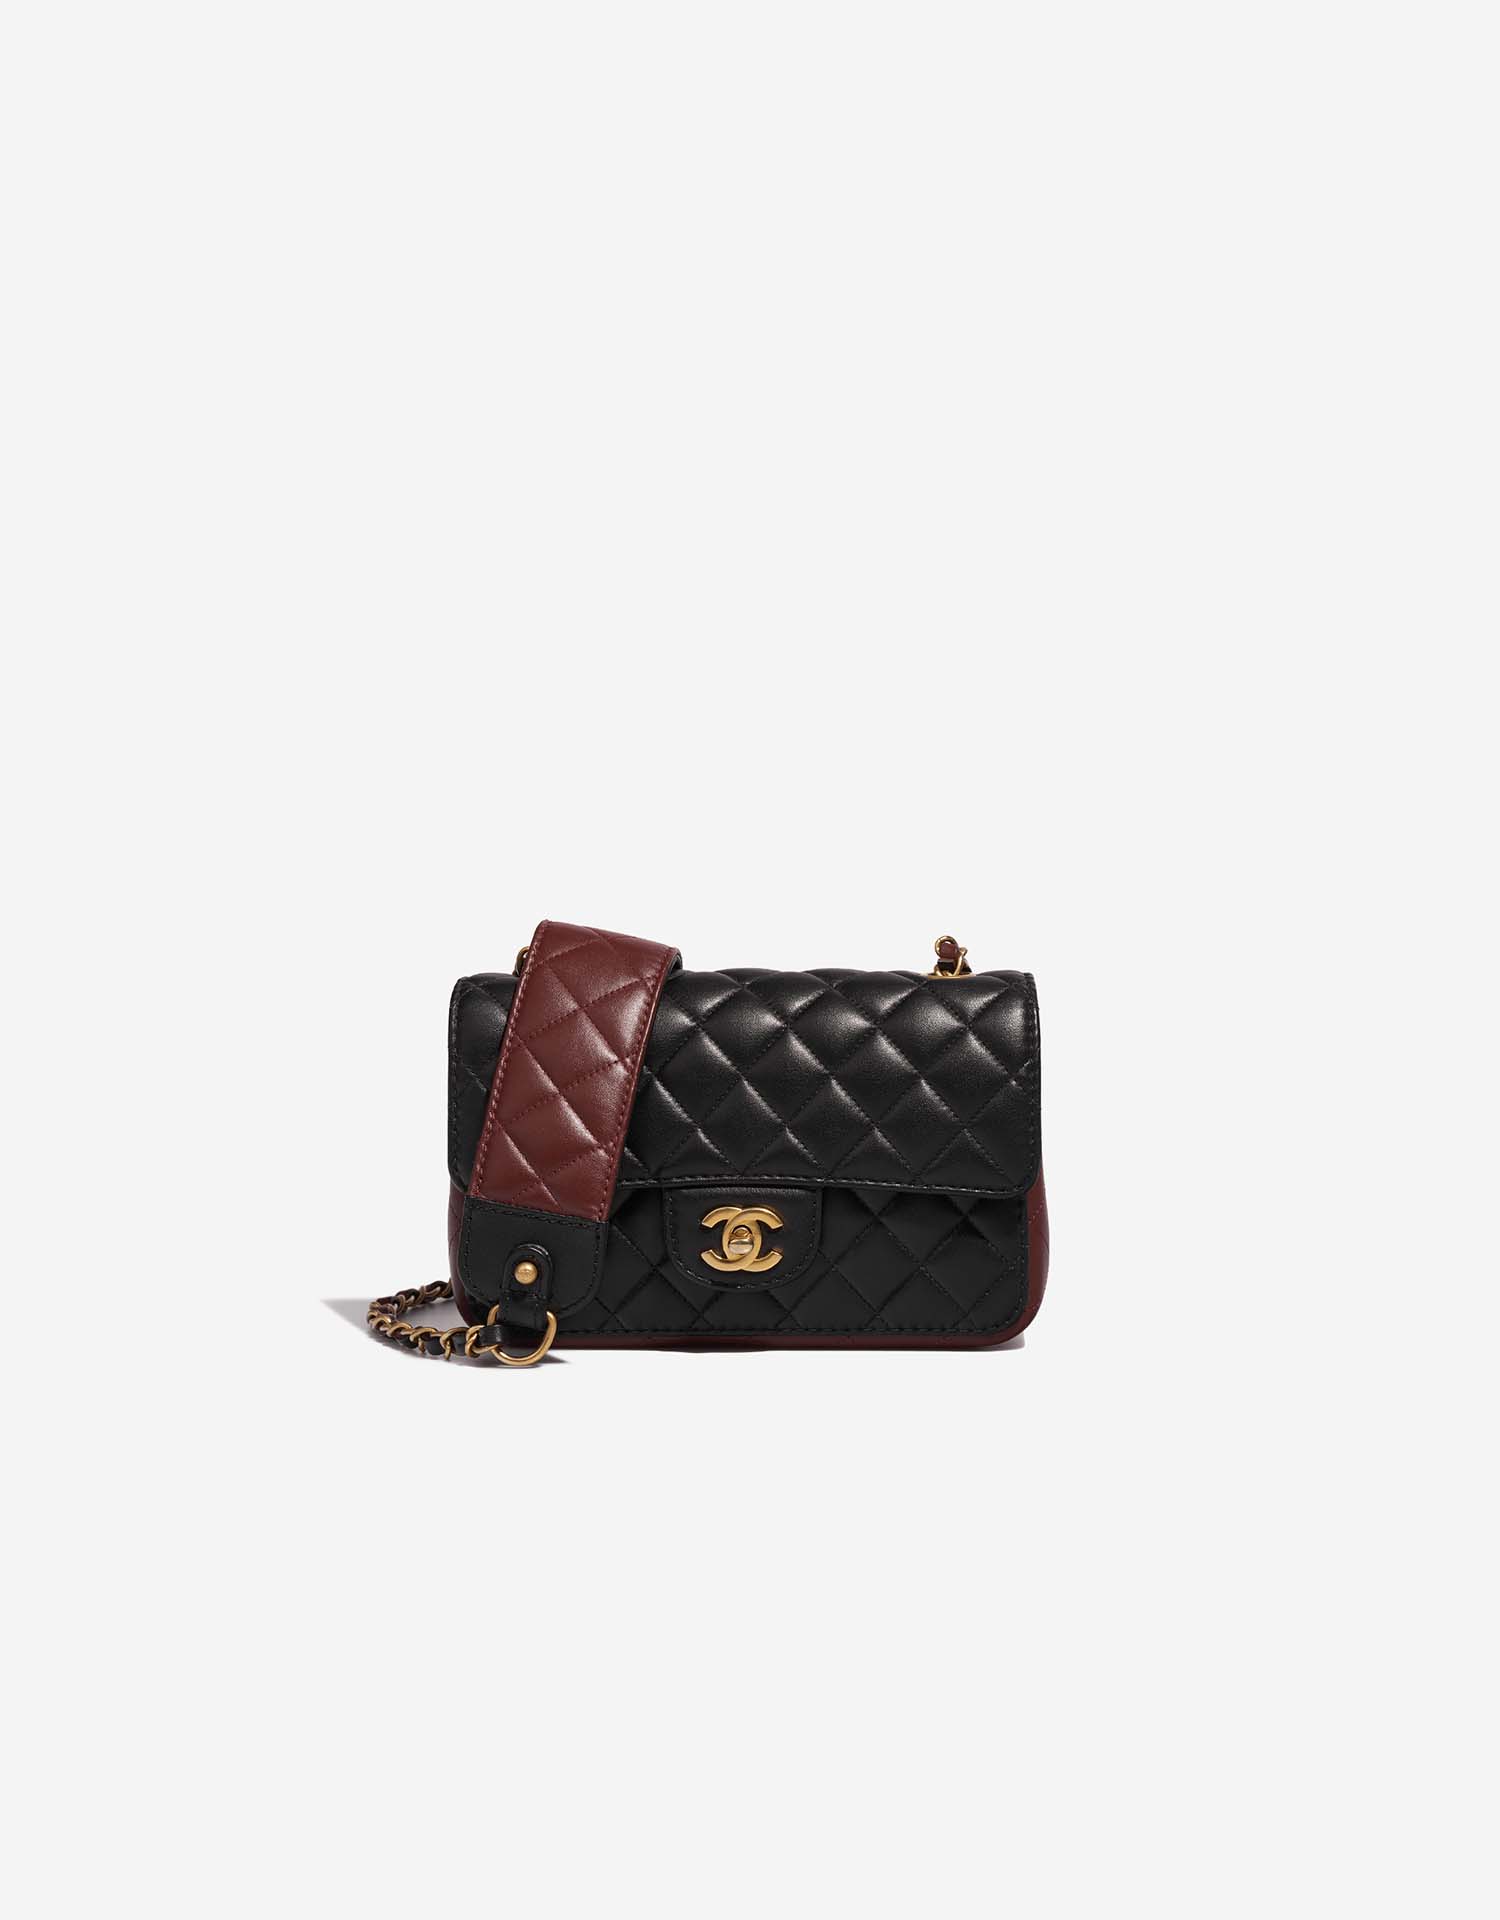 Louis Vuitton "Zippy Wallet" Box, Dustbag, Ribbon in Ex